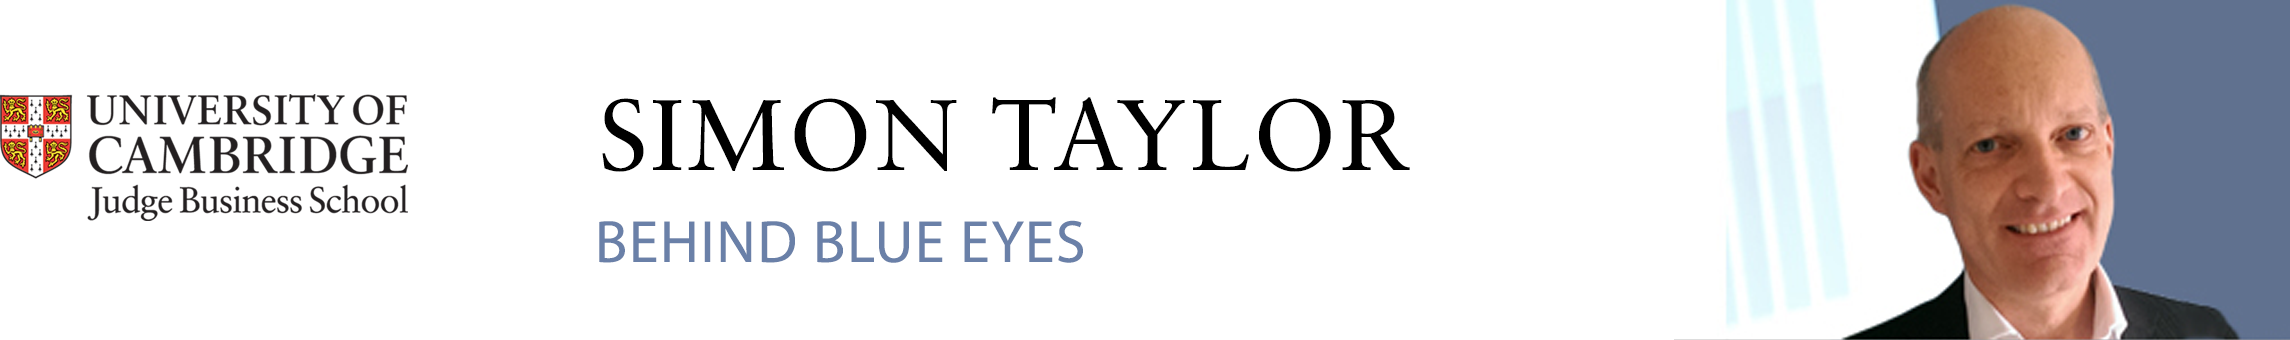 Behind blue eyes: Simon Taylor's blog.